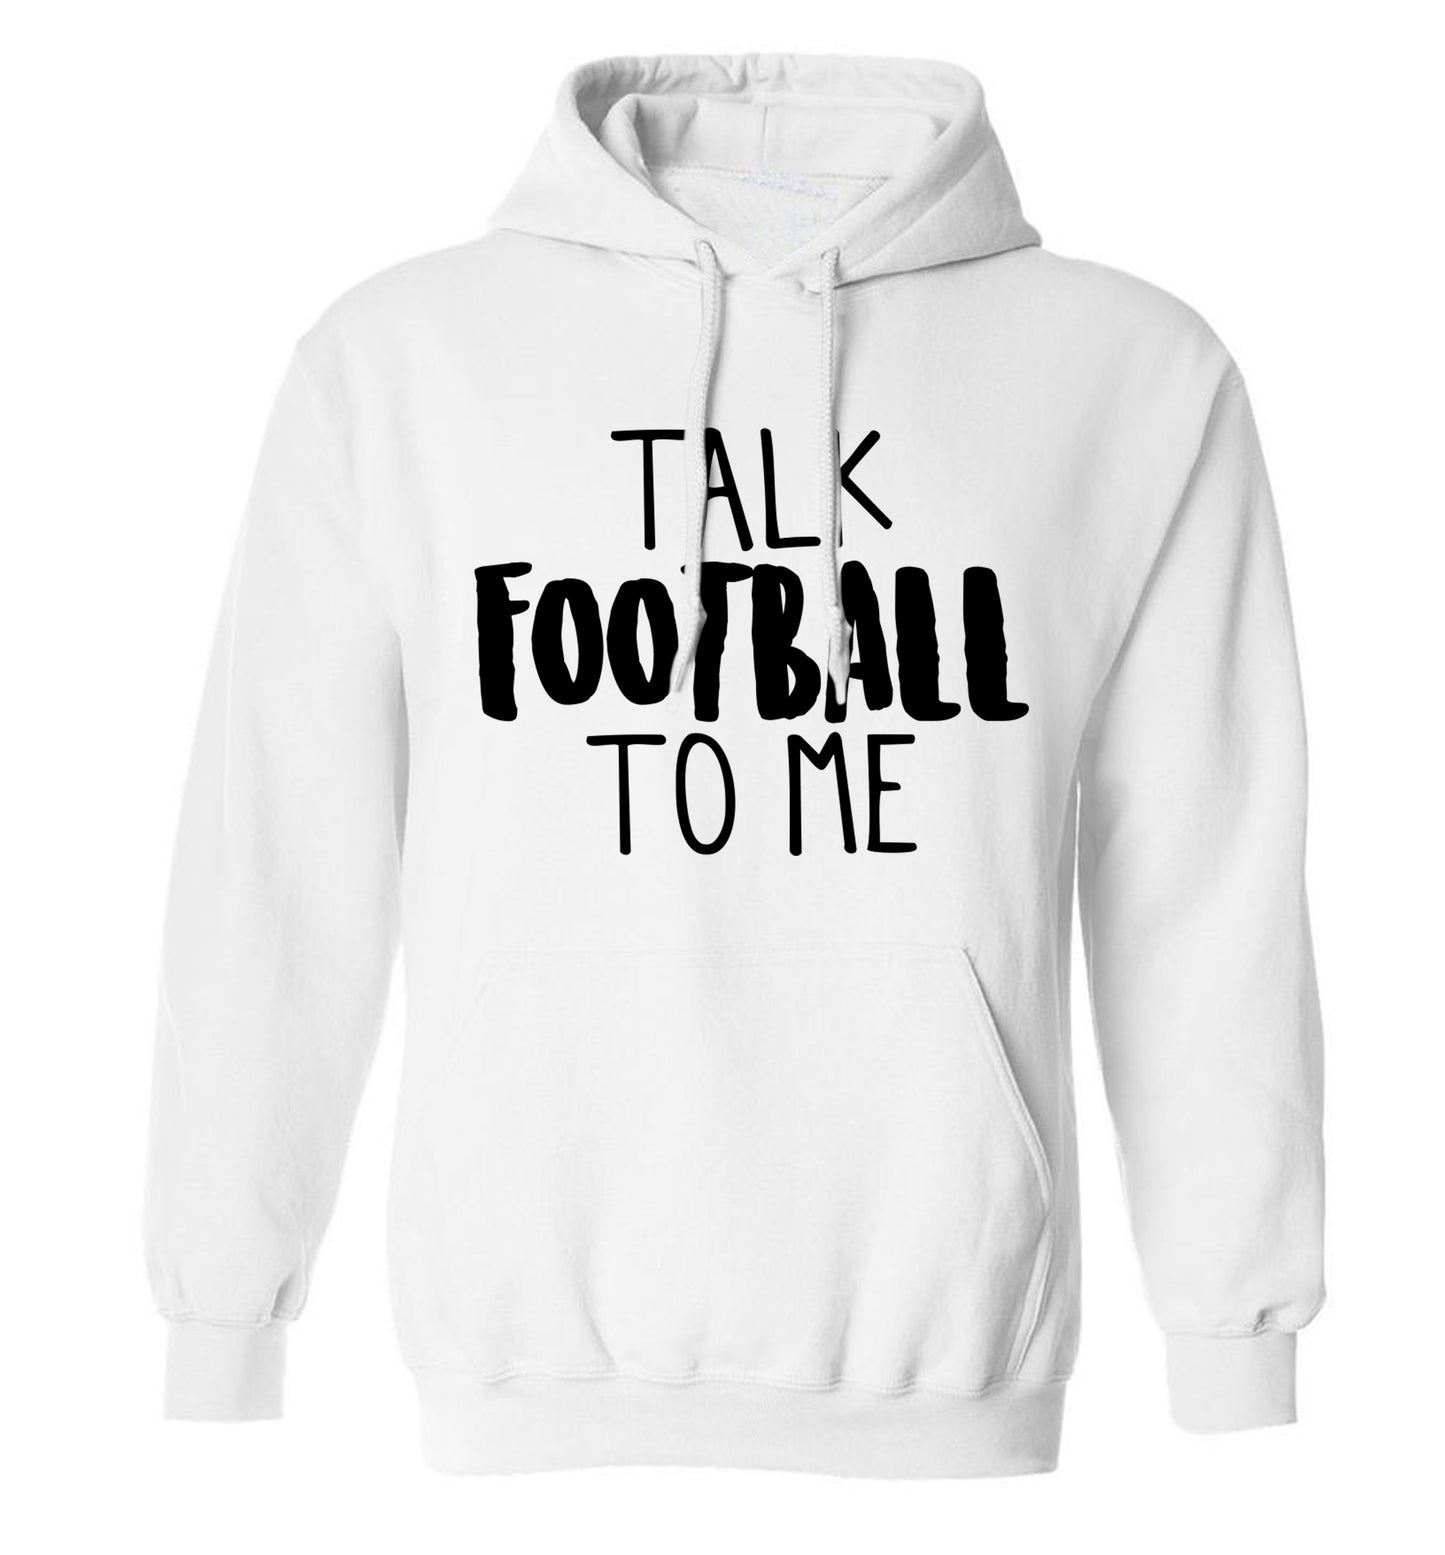 Talk football to me adults unisexwhite hoodie 2XL